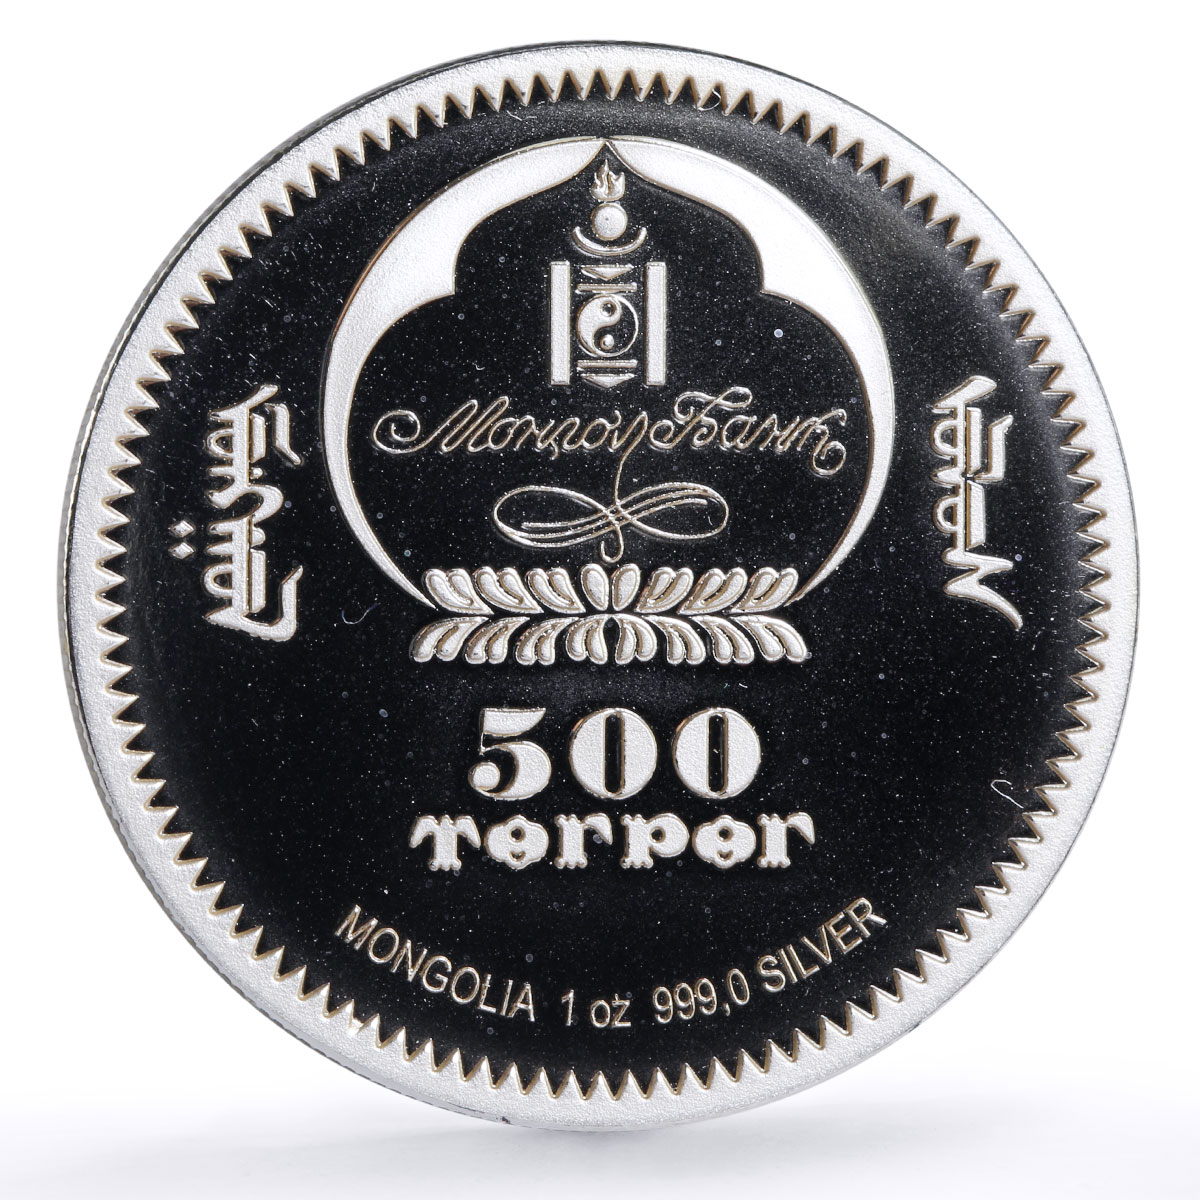 Mongolia 500 togrog Japanese Sumo Wrestler Tanikaze colored silver coin 2005